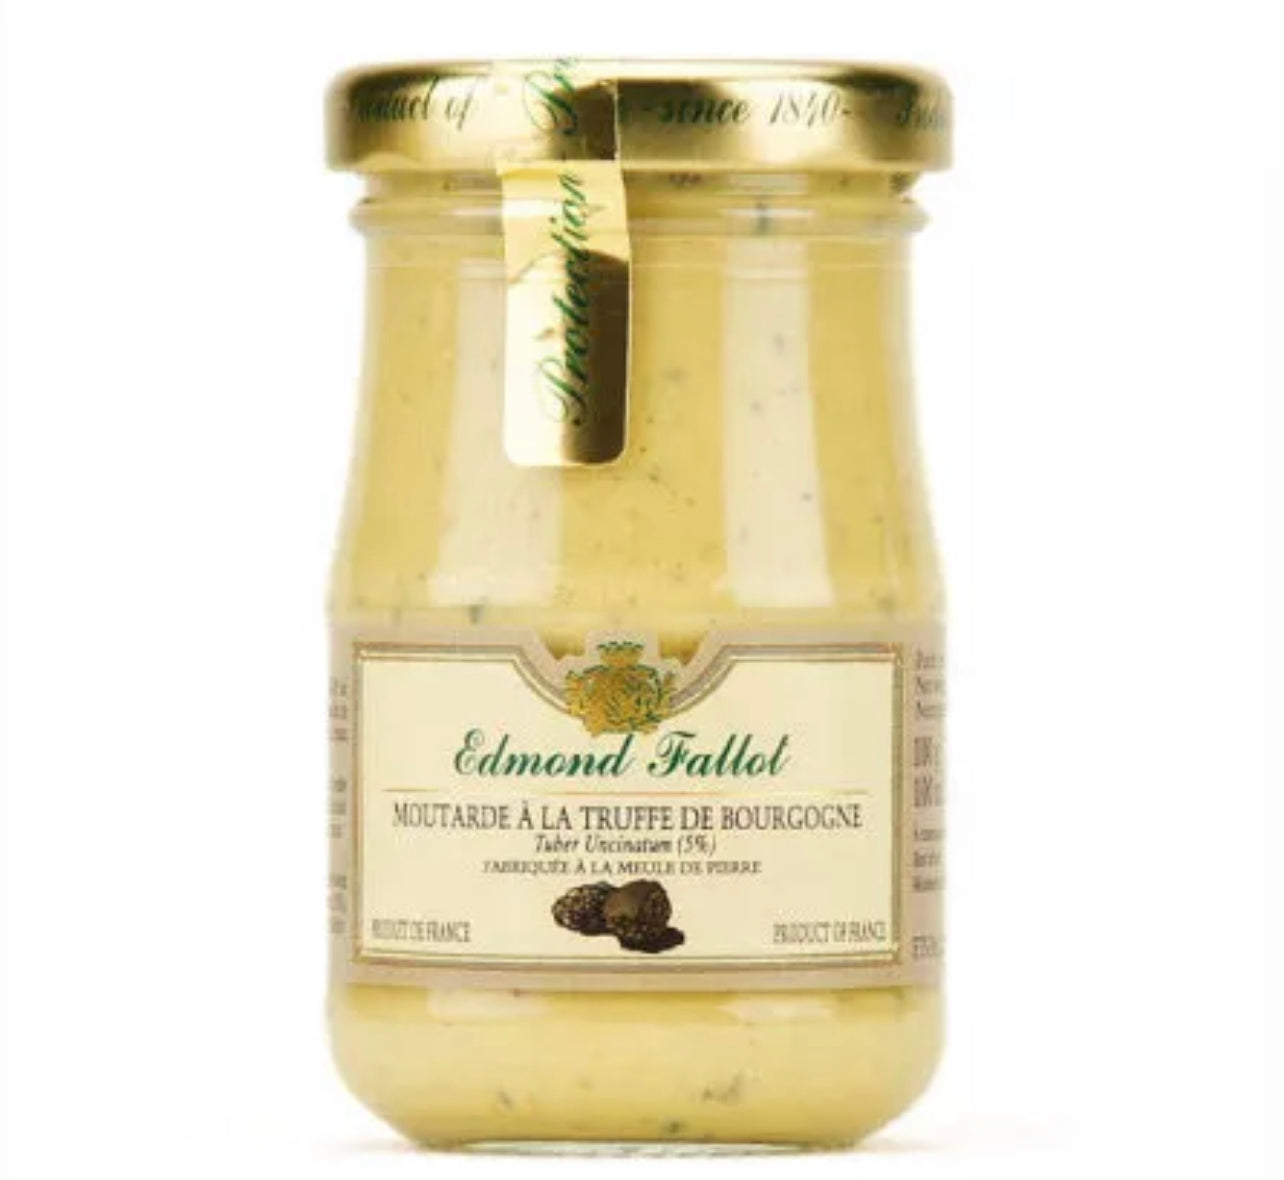 Burgundy truffle mustard "Tuber Uncinatum" 5% - 100g